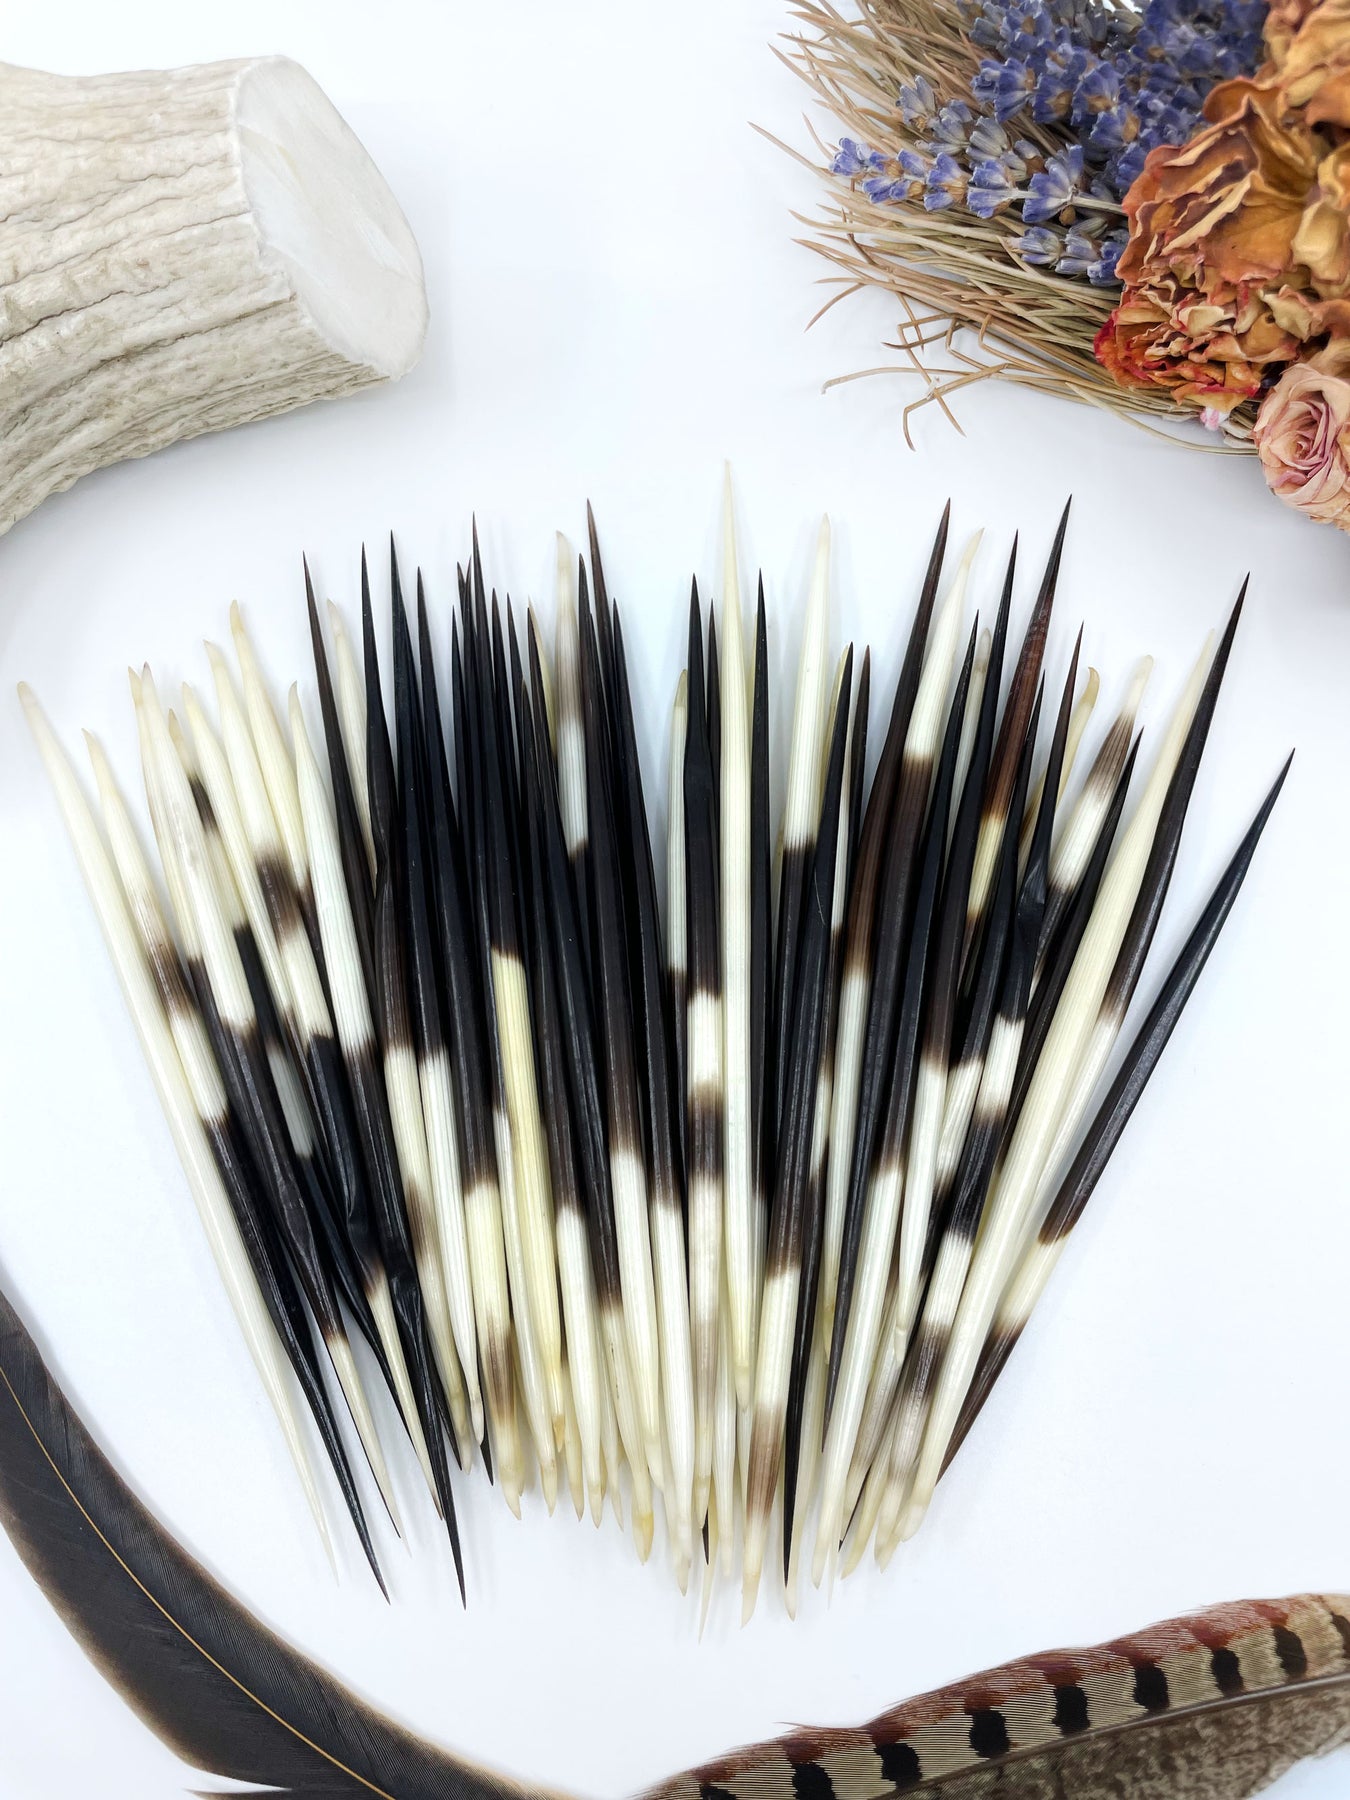 African Porcupine quills